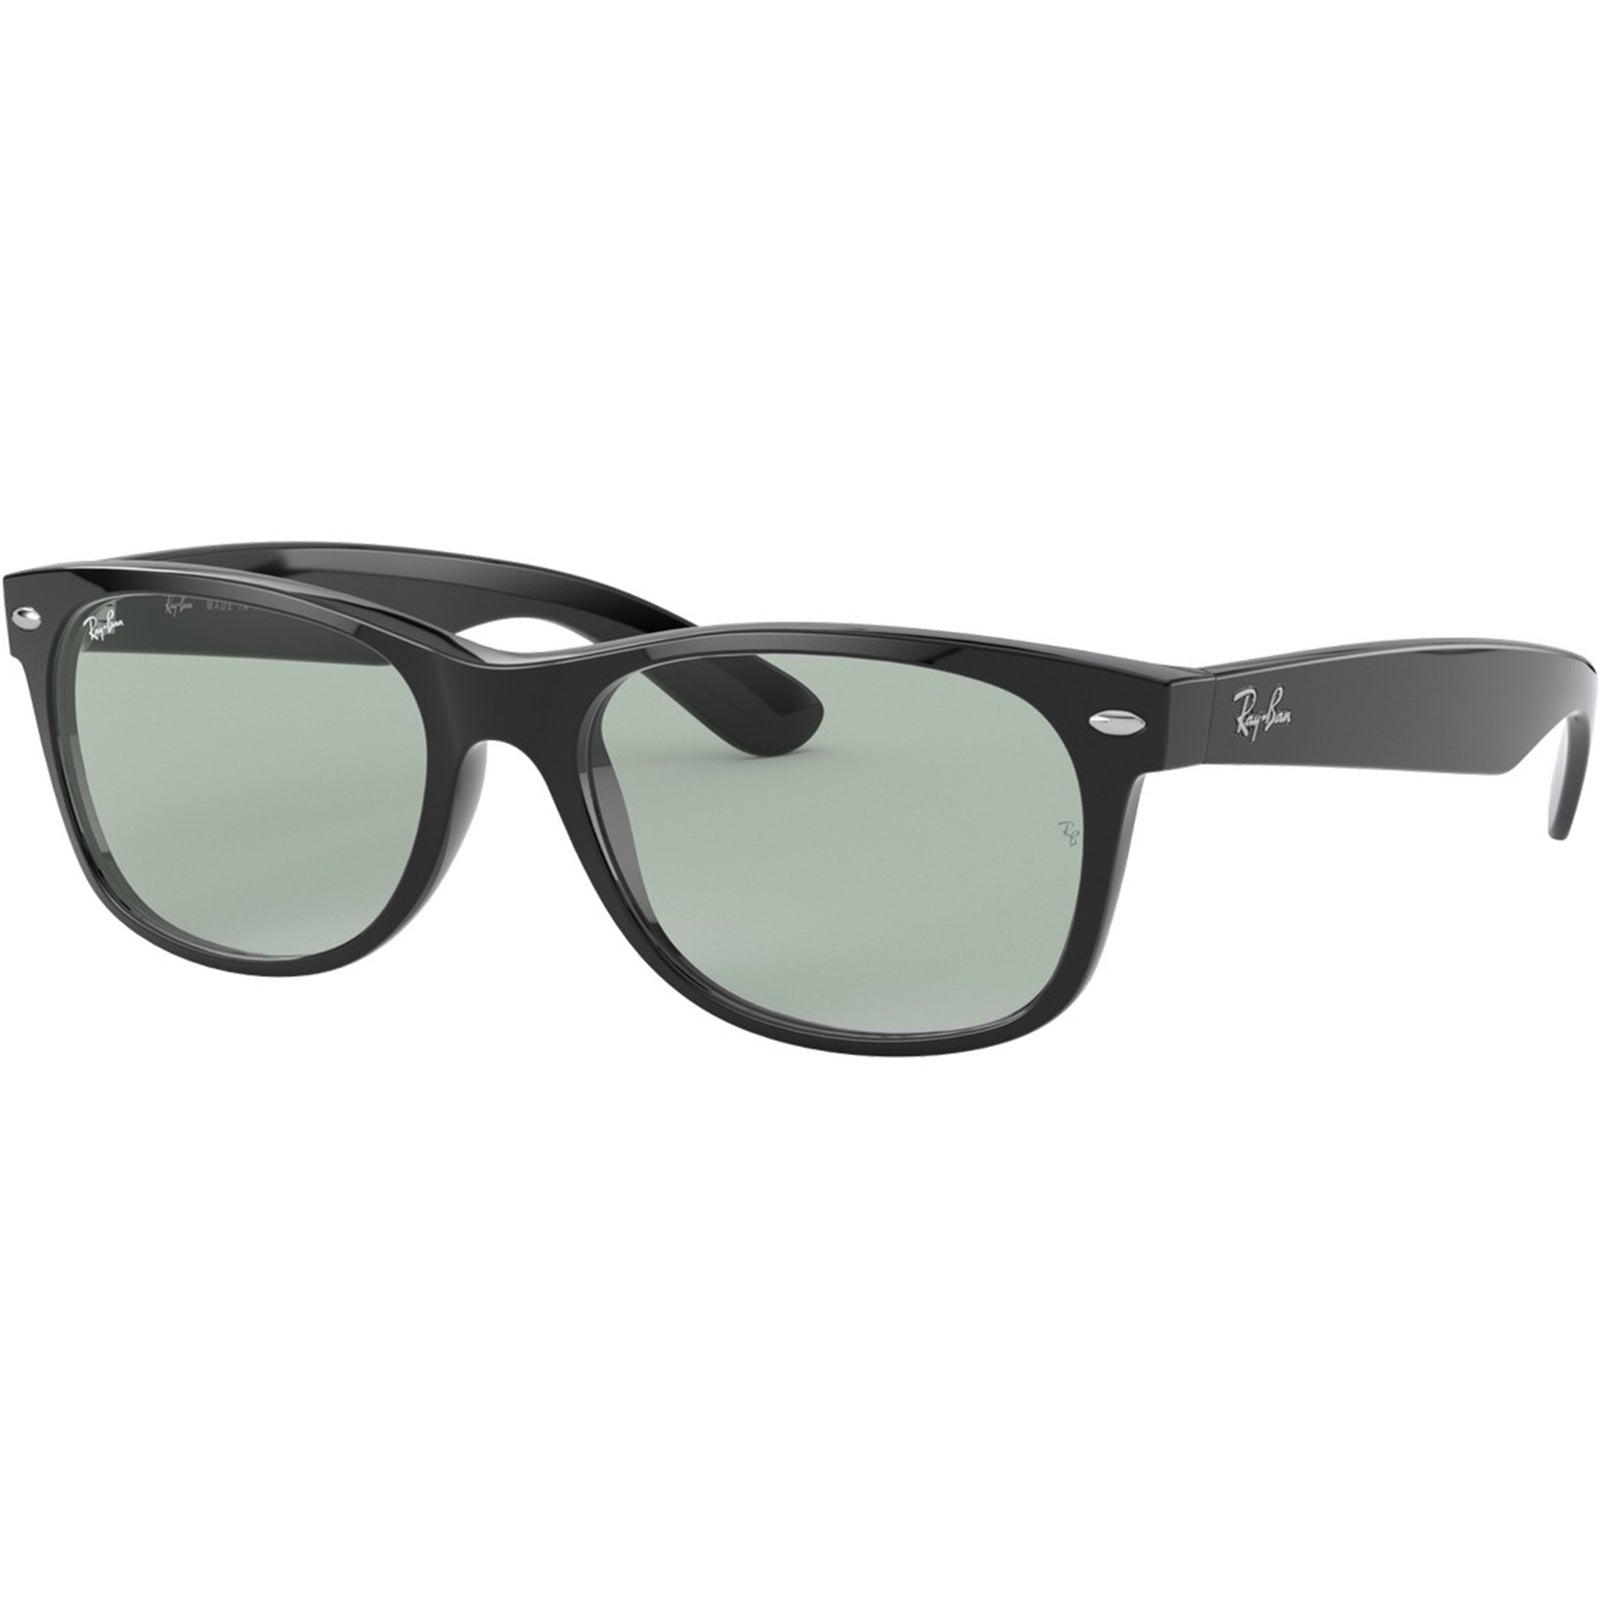 Ray-Ban New Wayfarer Washed Lenses Adult Lifestyle Sunglasses-0RB2132F